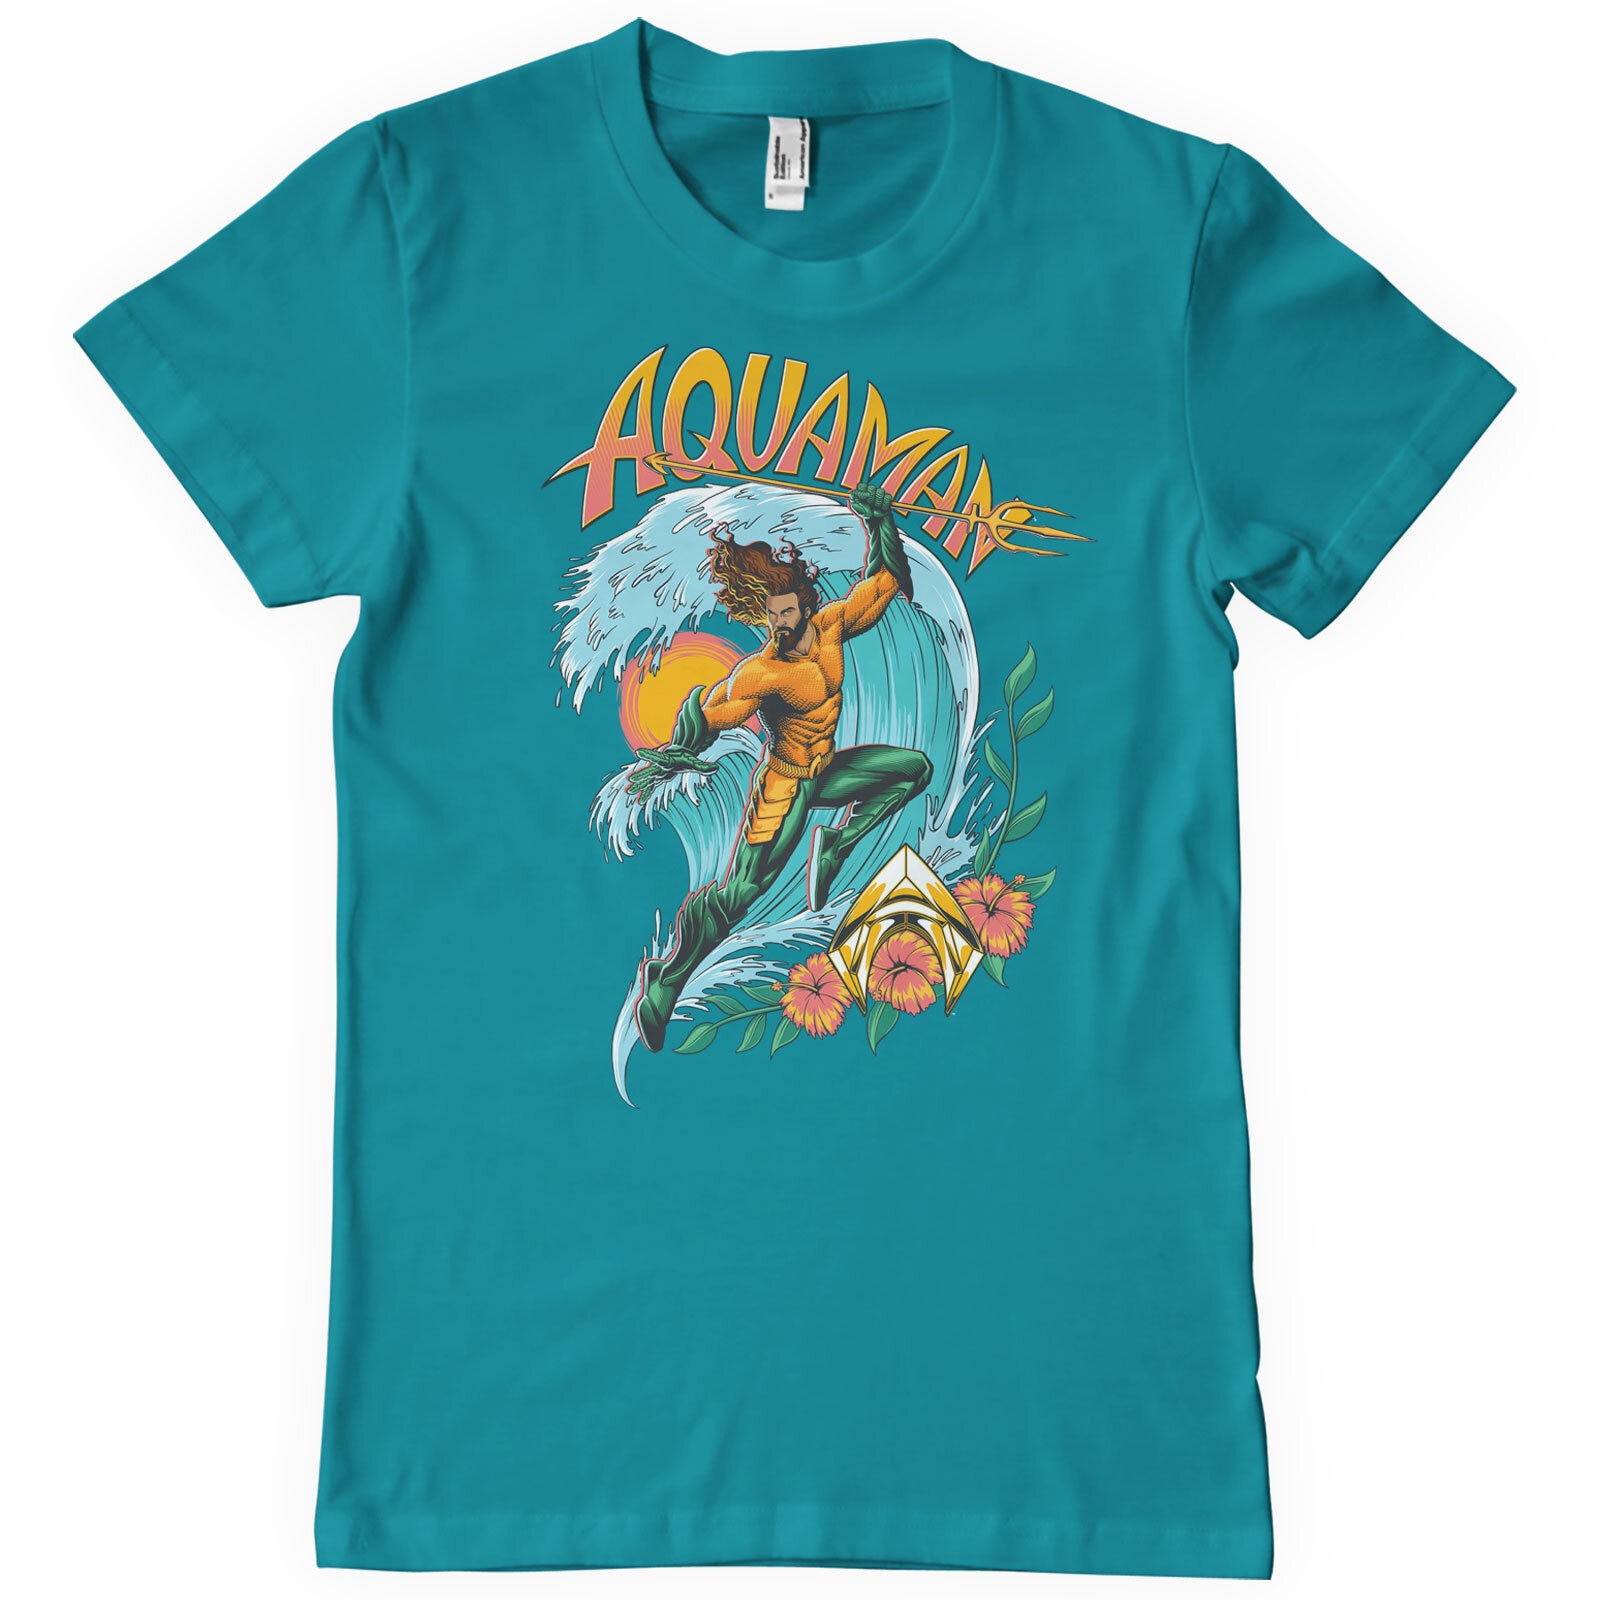 Aquaman Surf Style T-Shirt